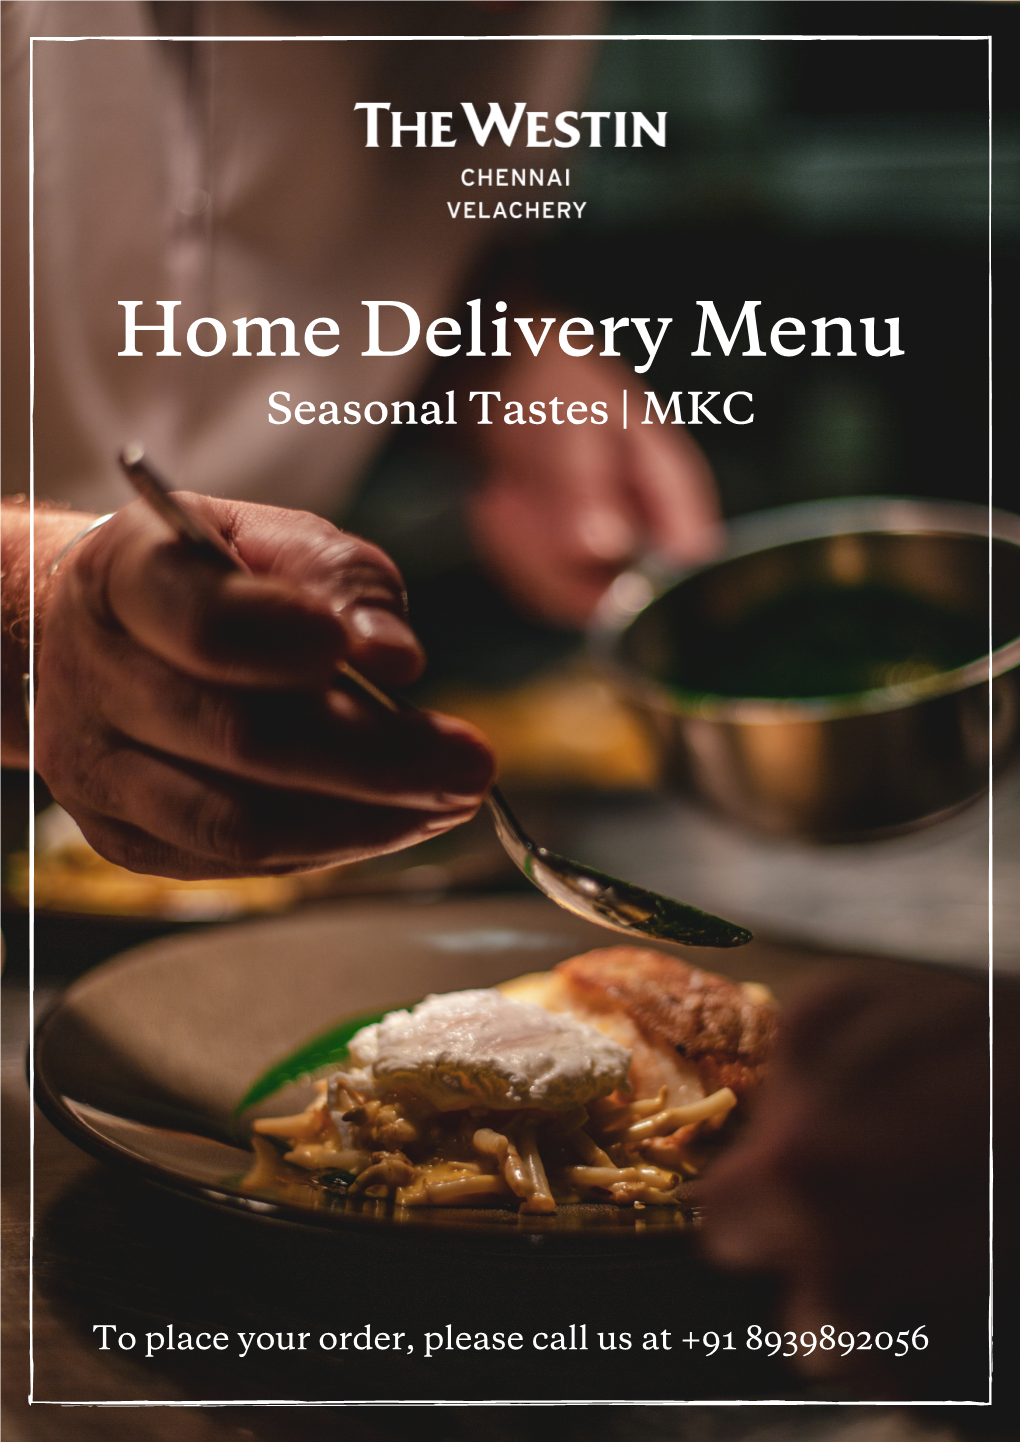 Home Delivery Menu Seasonal Tastes | MKC